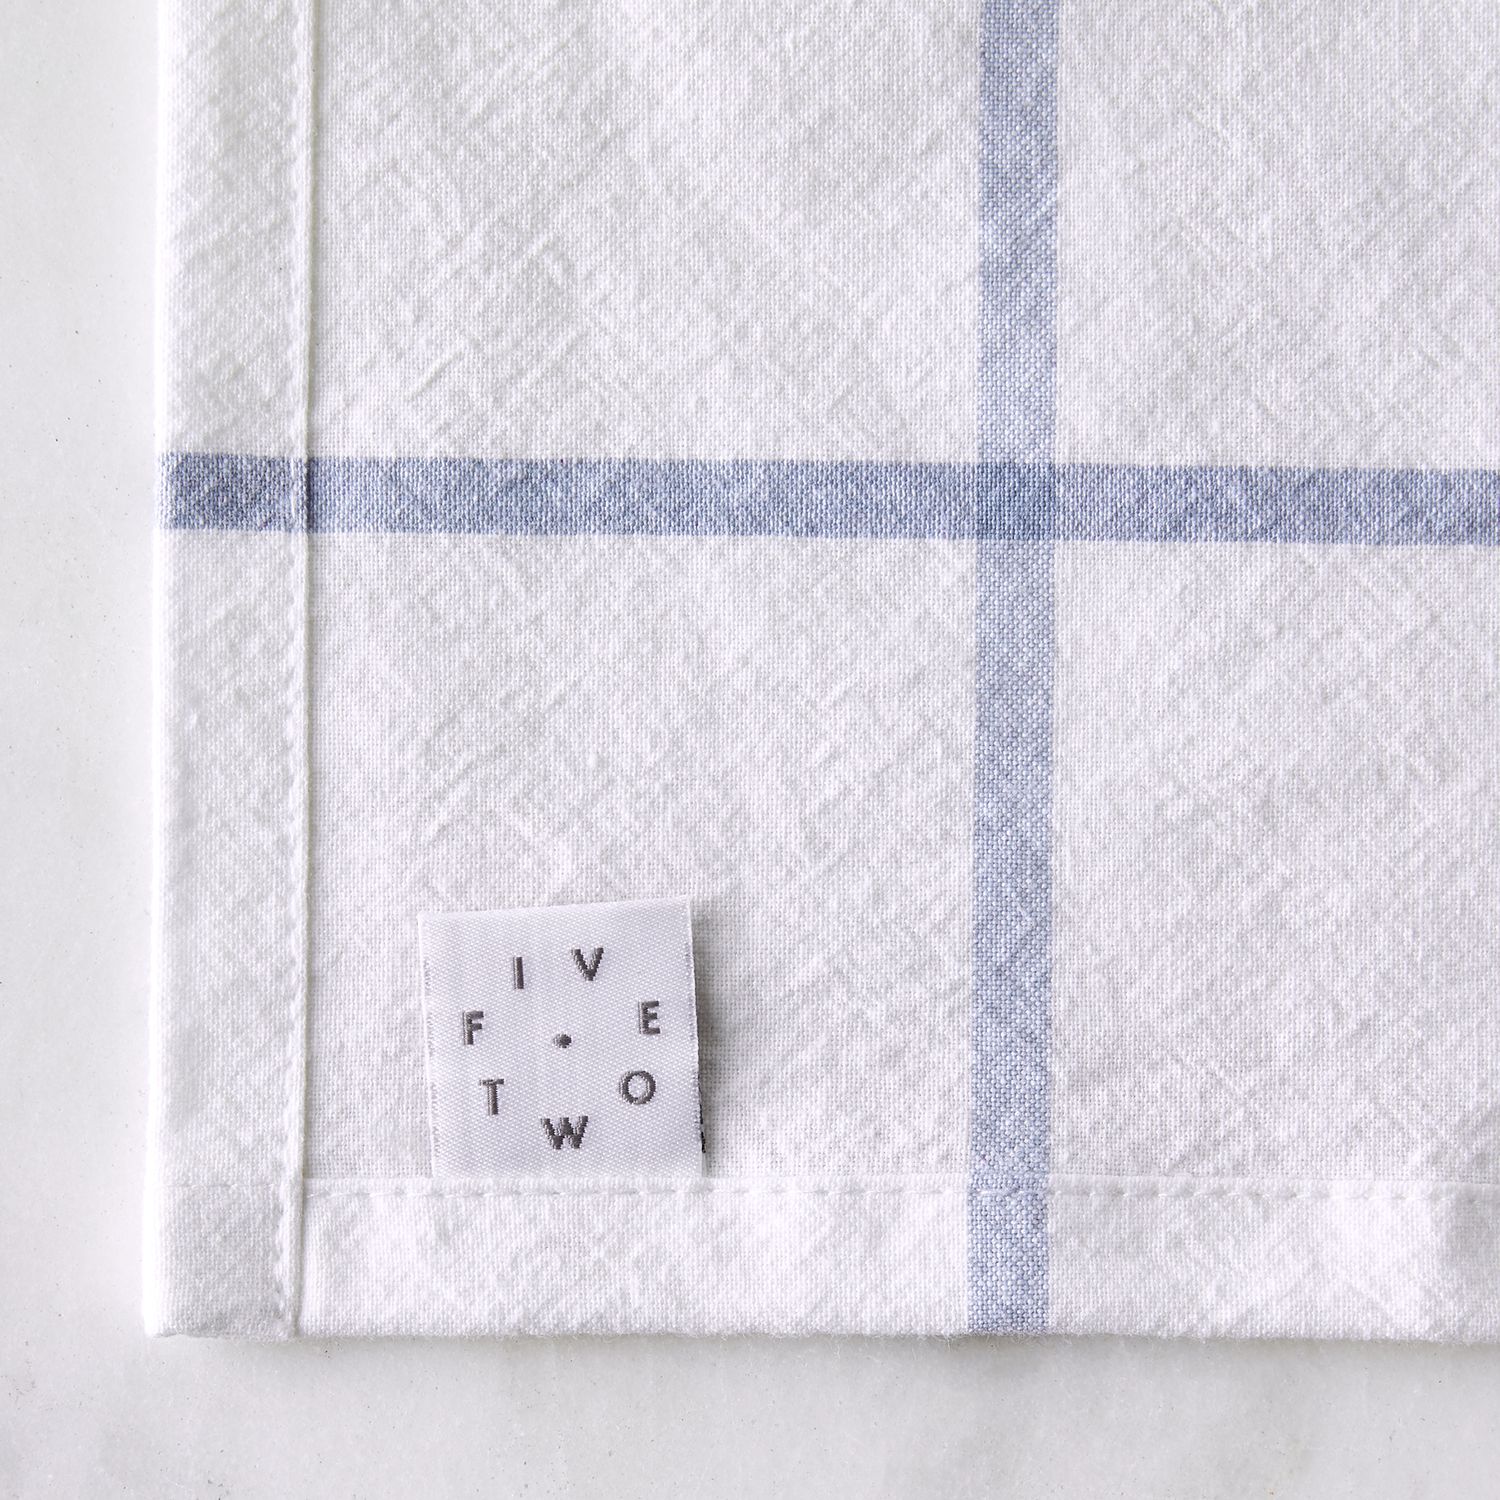 Geometry Microfiber Dish Towels, Set of 2 on Food52